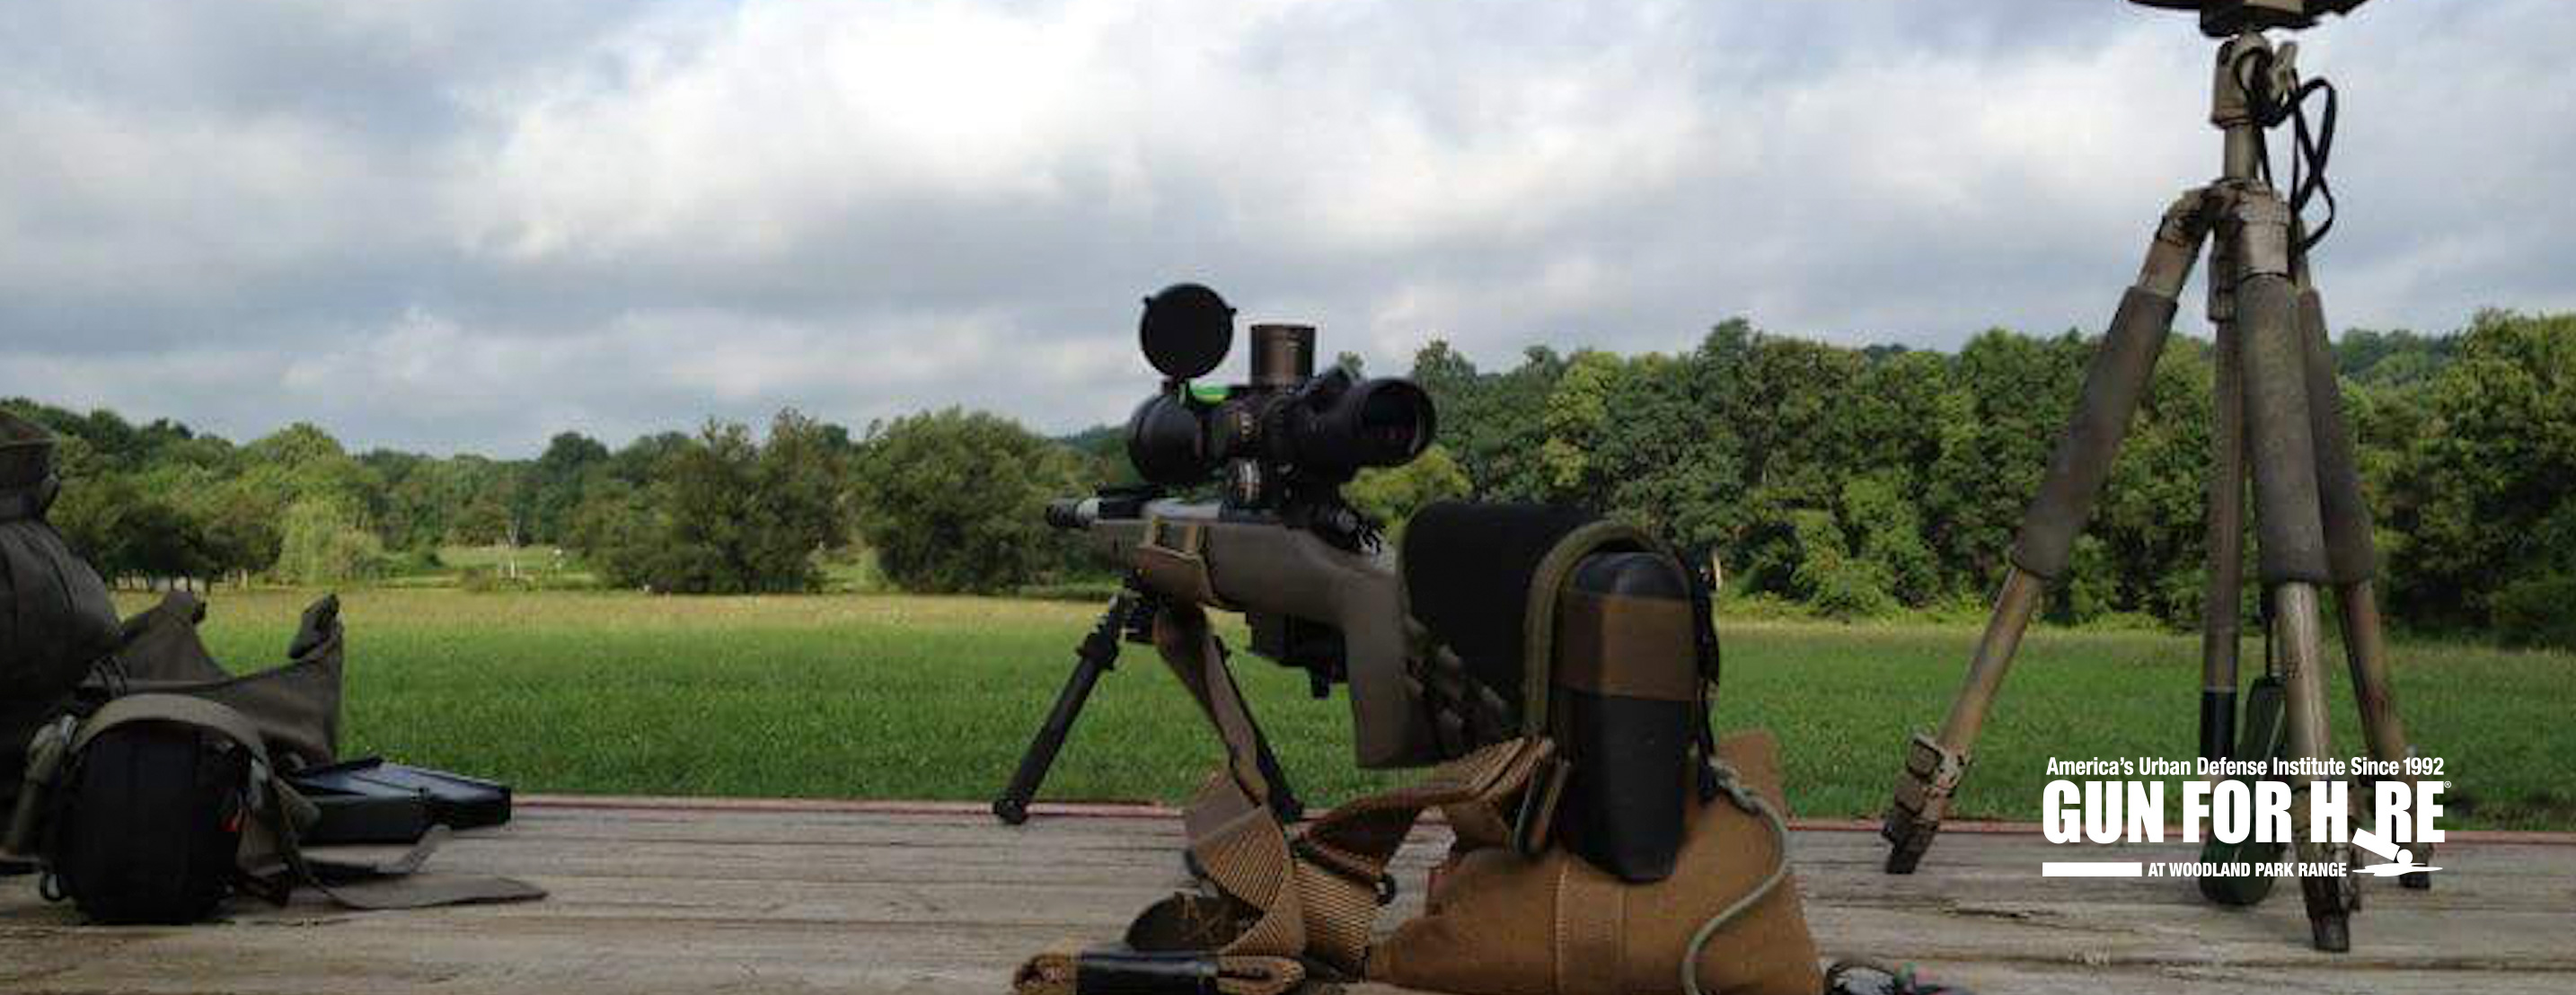 Sniper 5 - Armed Military Urban Shotgun